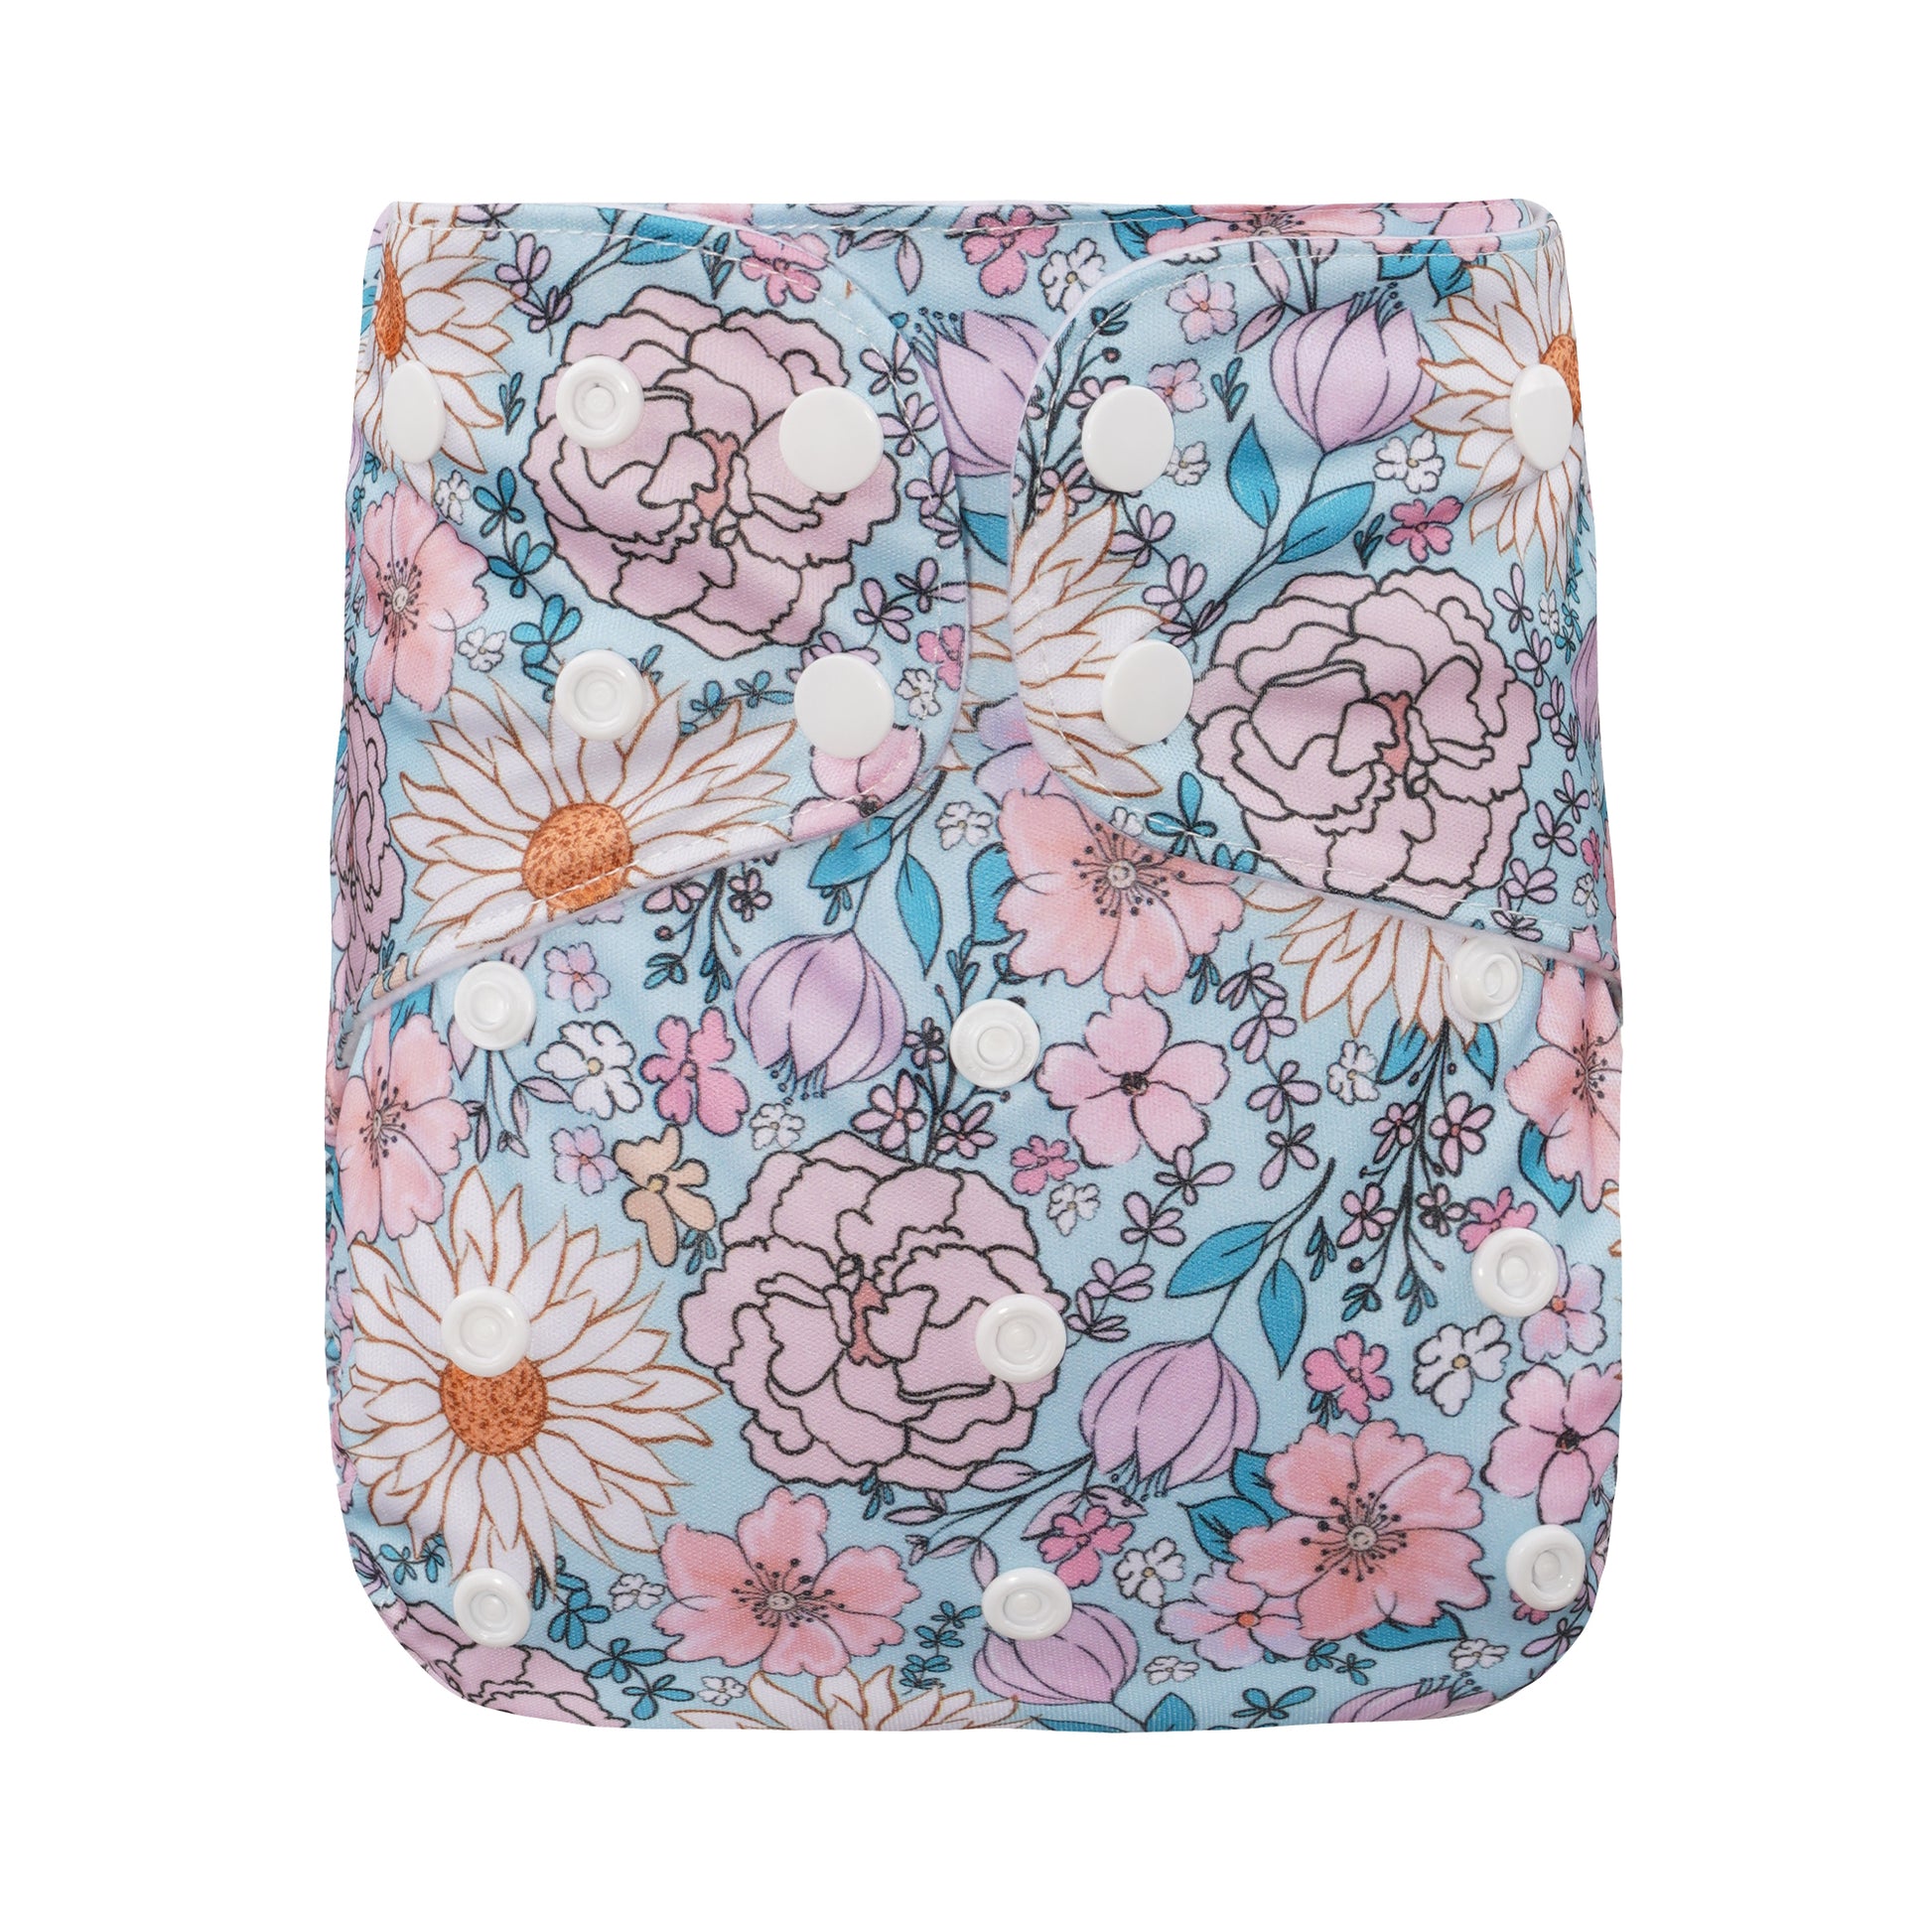 Bear & Moo Reusable Cloth Nappy in Boho Floral print | Luxe